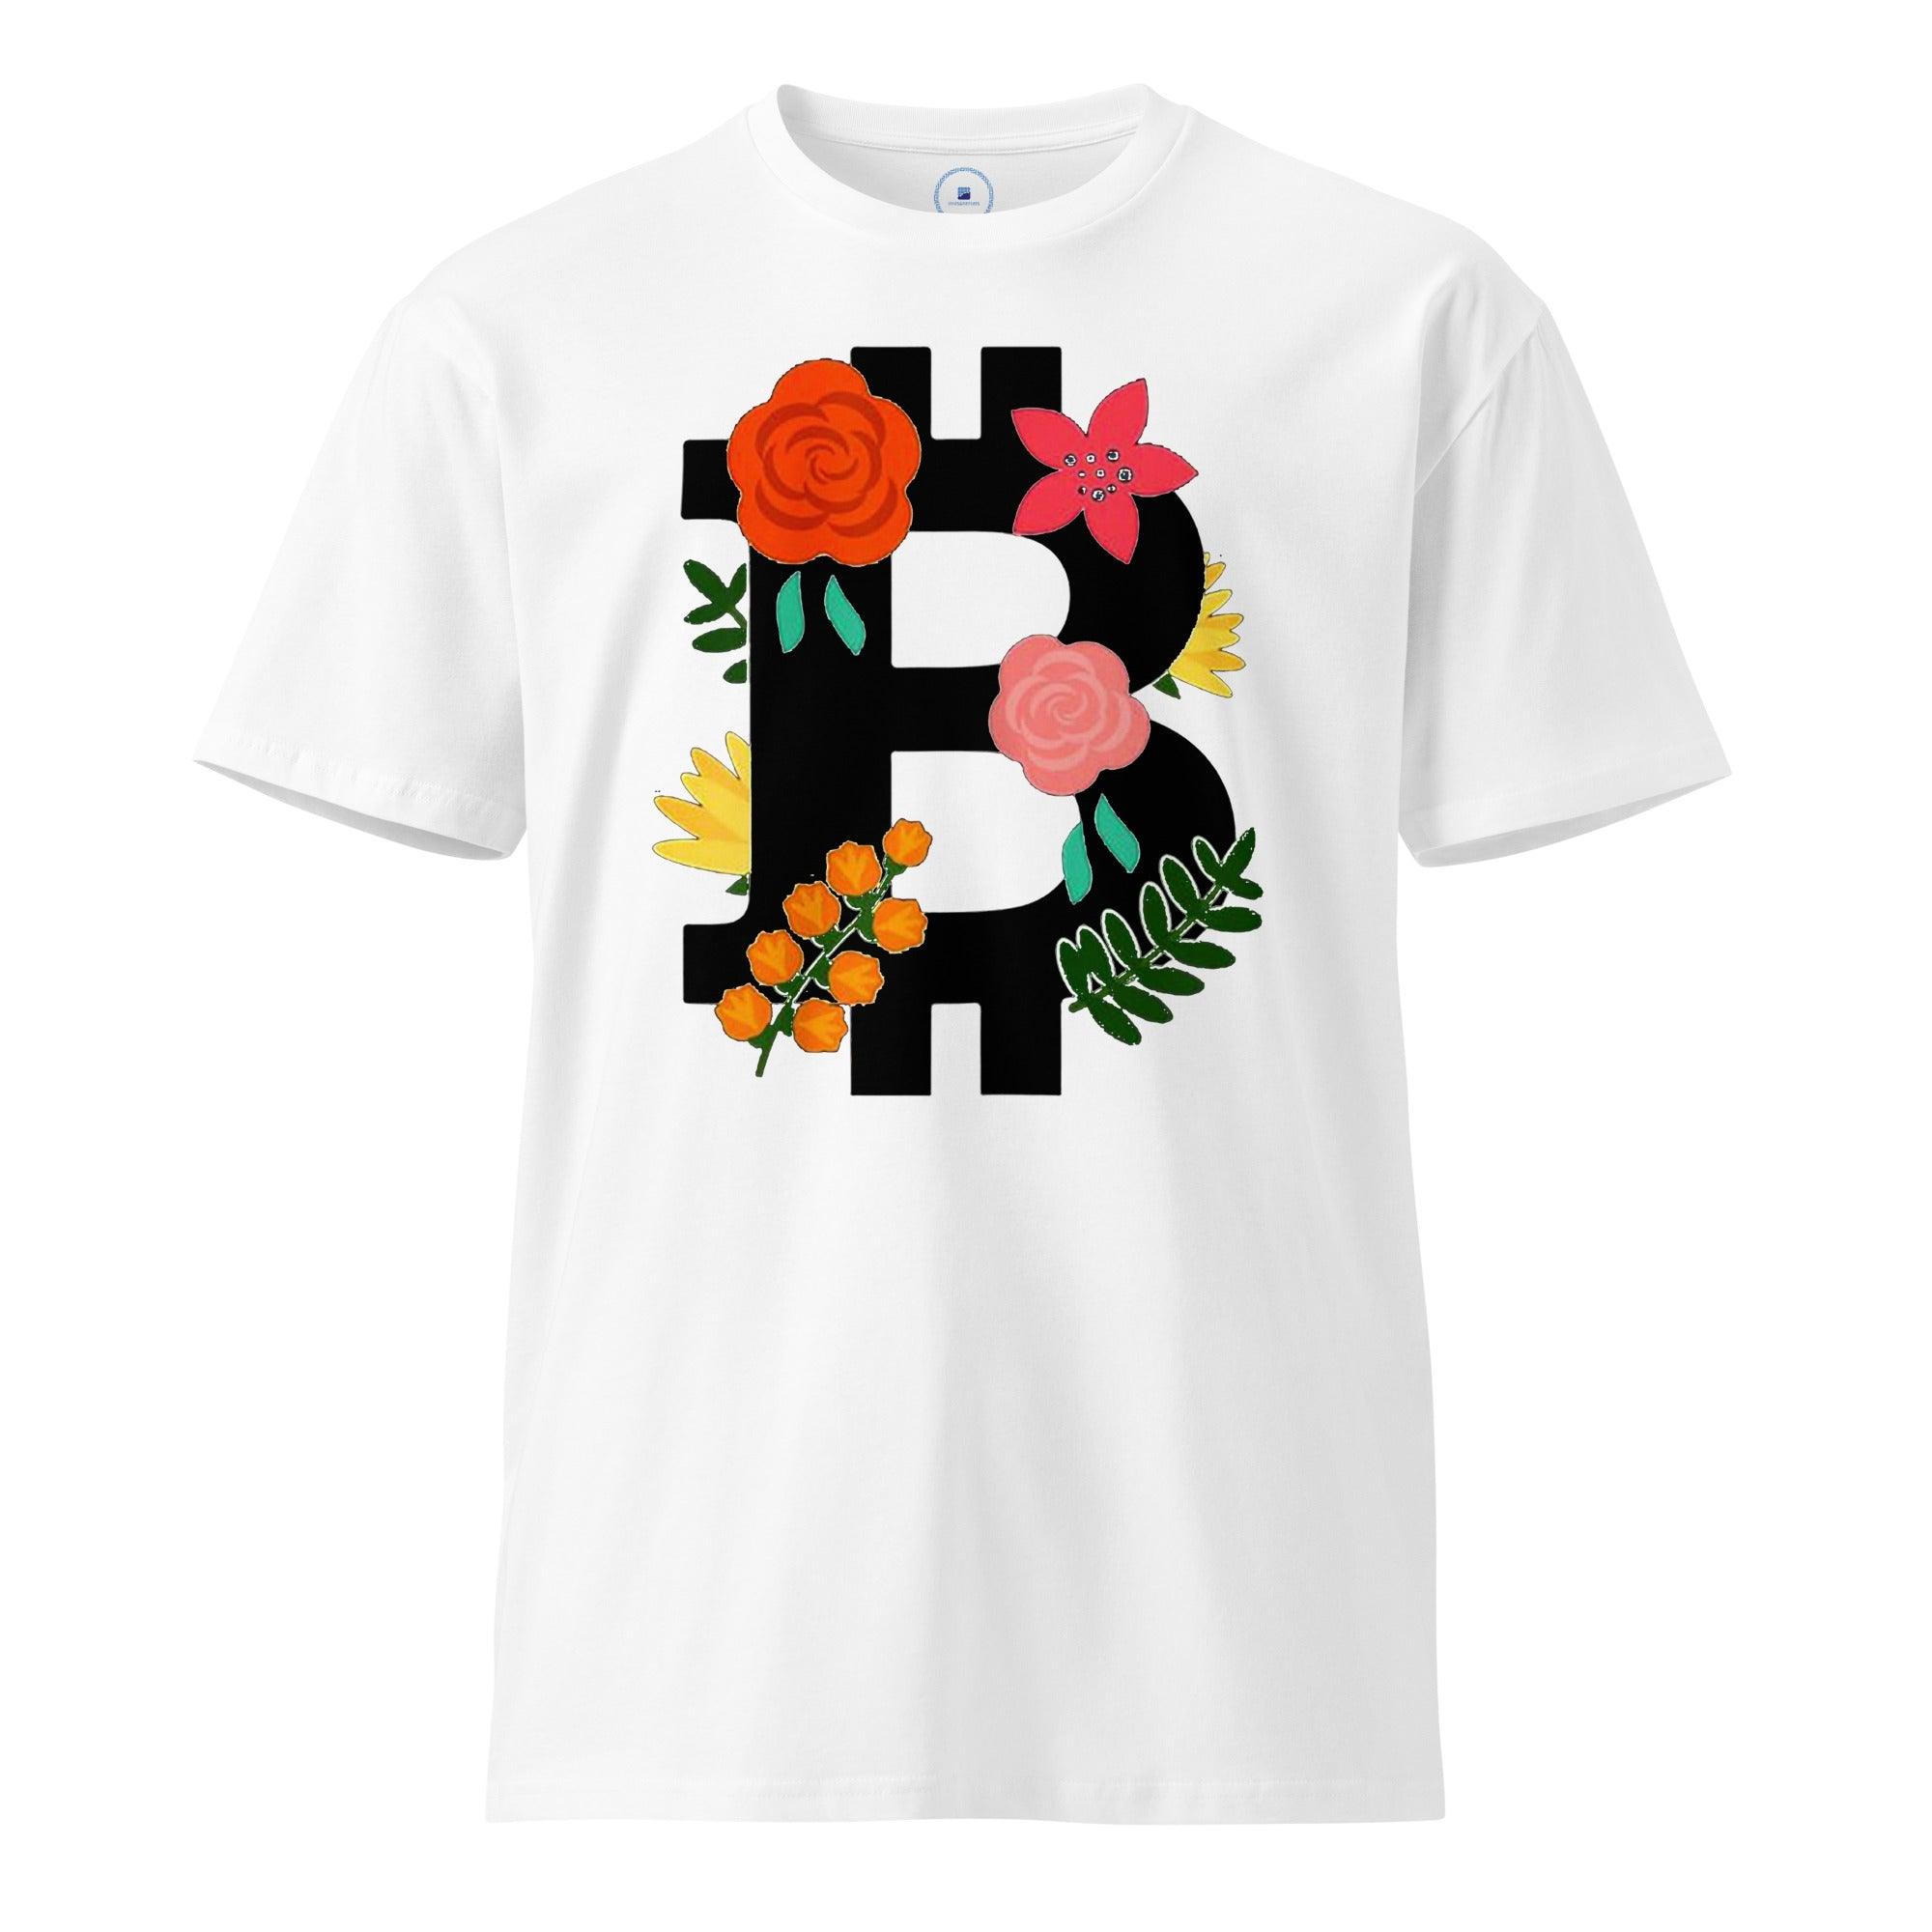 Bitcoin Flowers T-Shirt - InvestmenTees